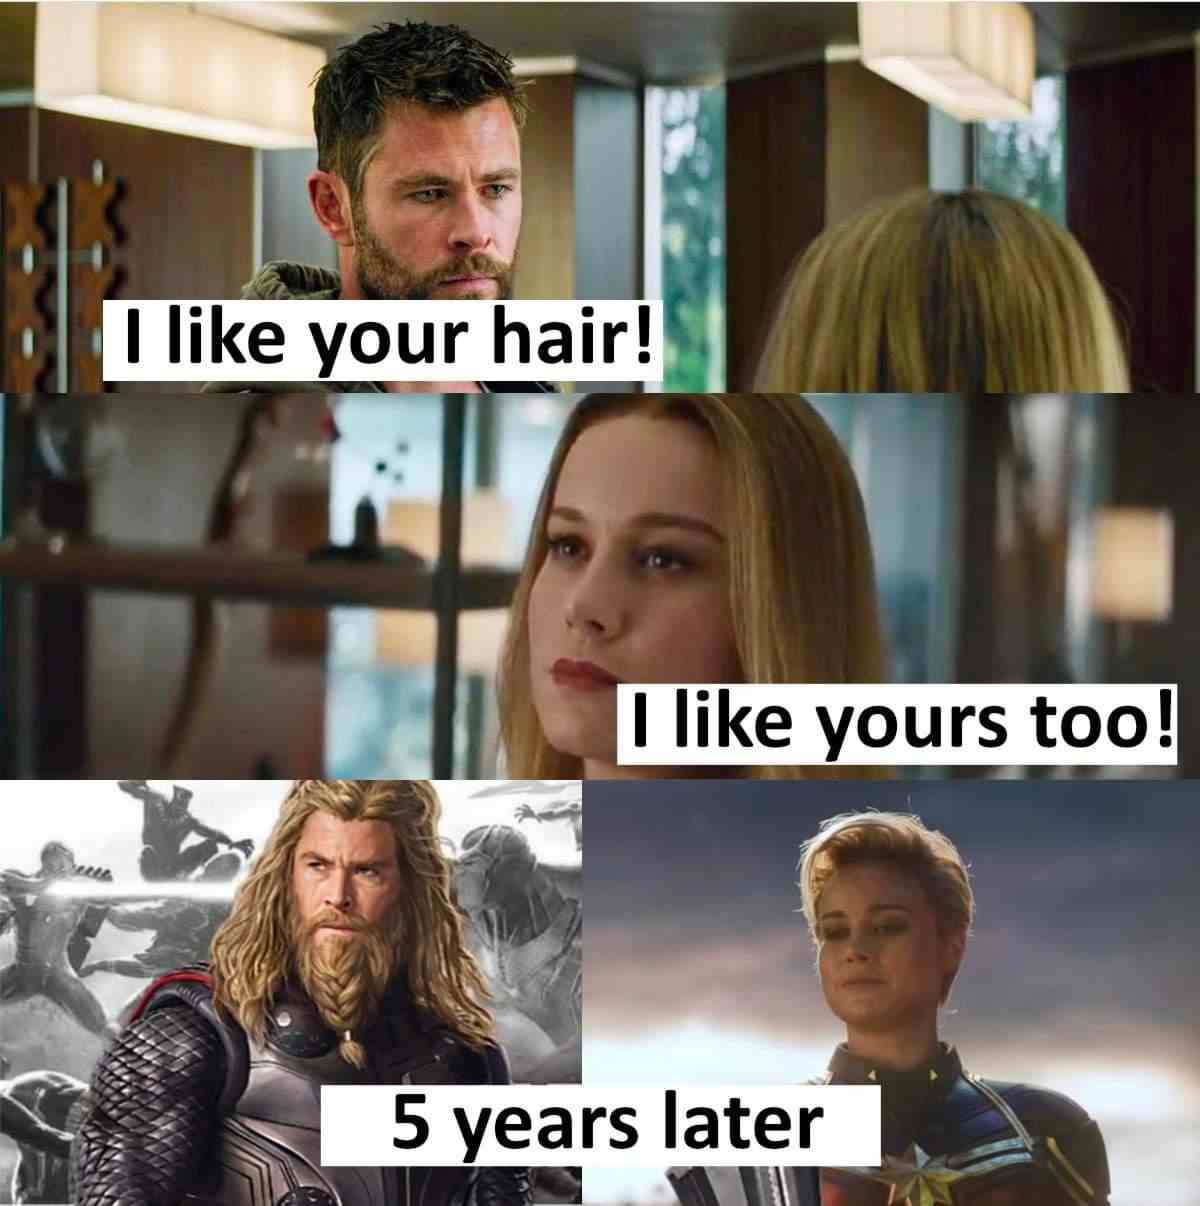 I like your hair!